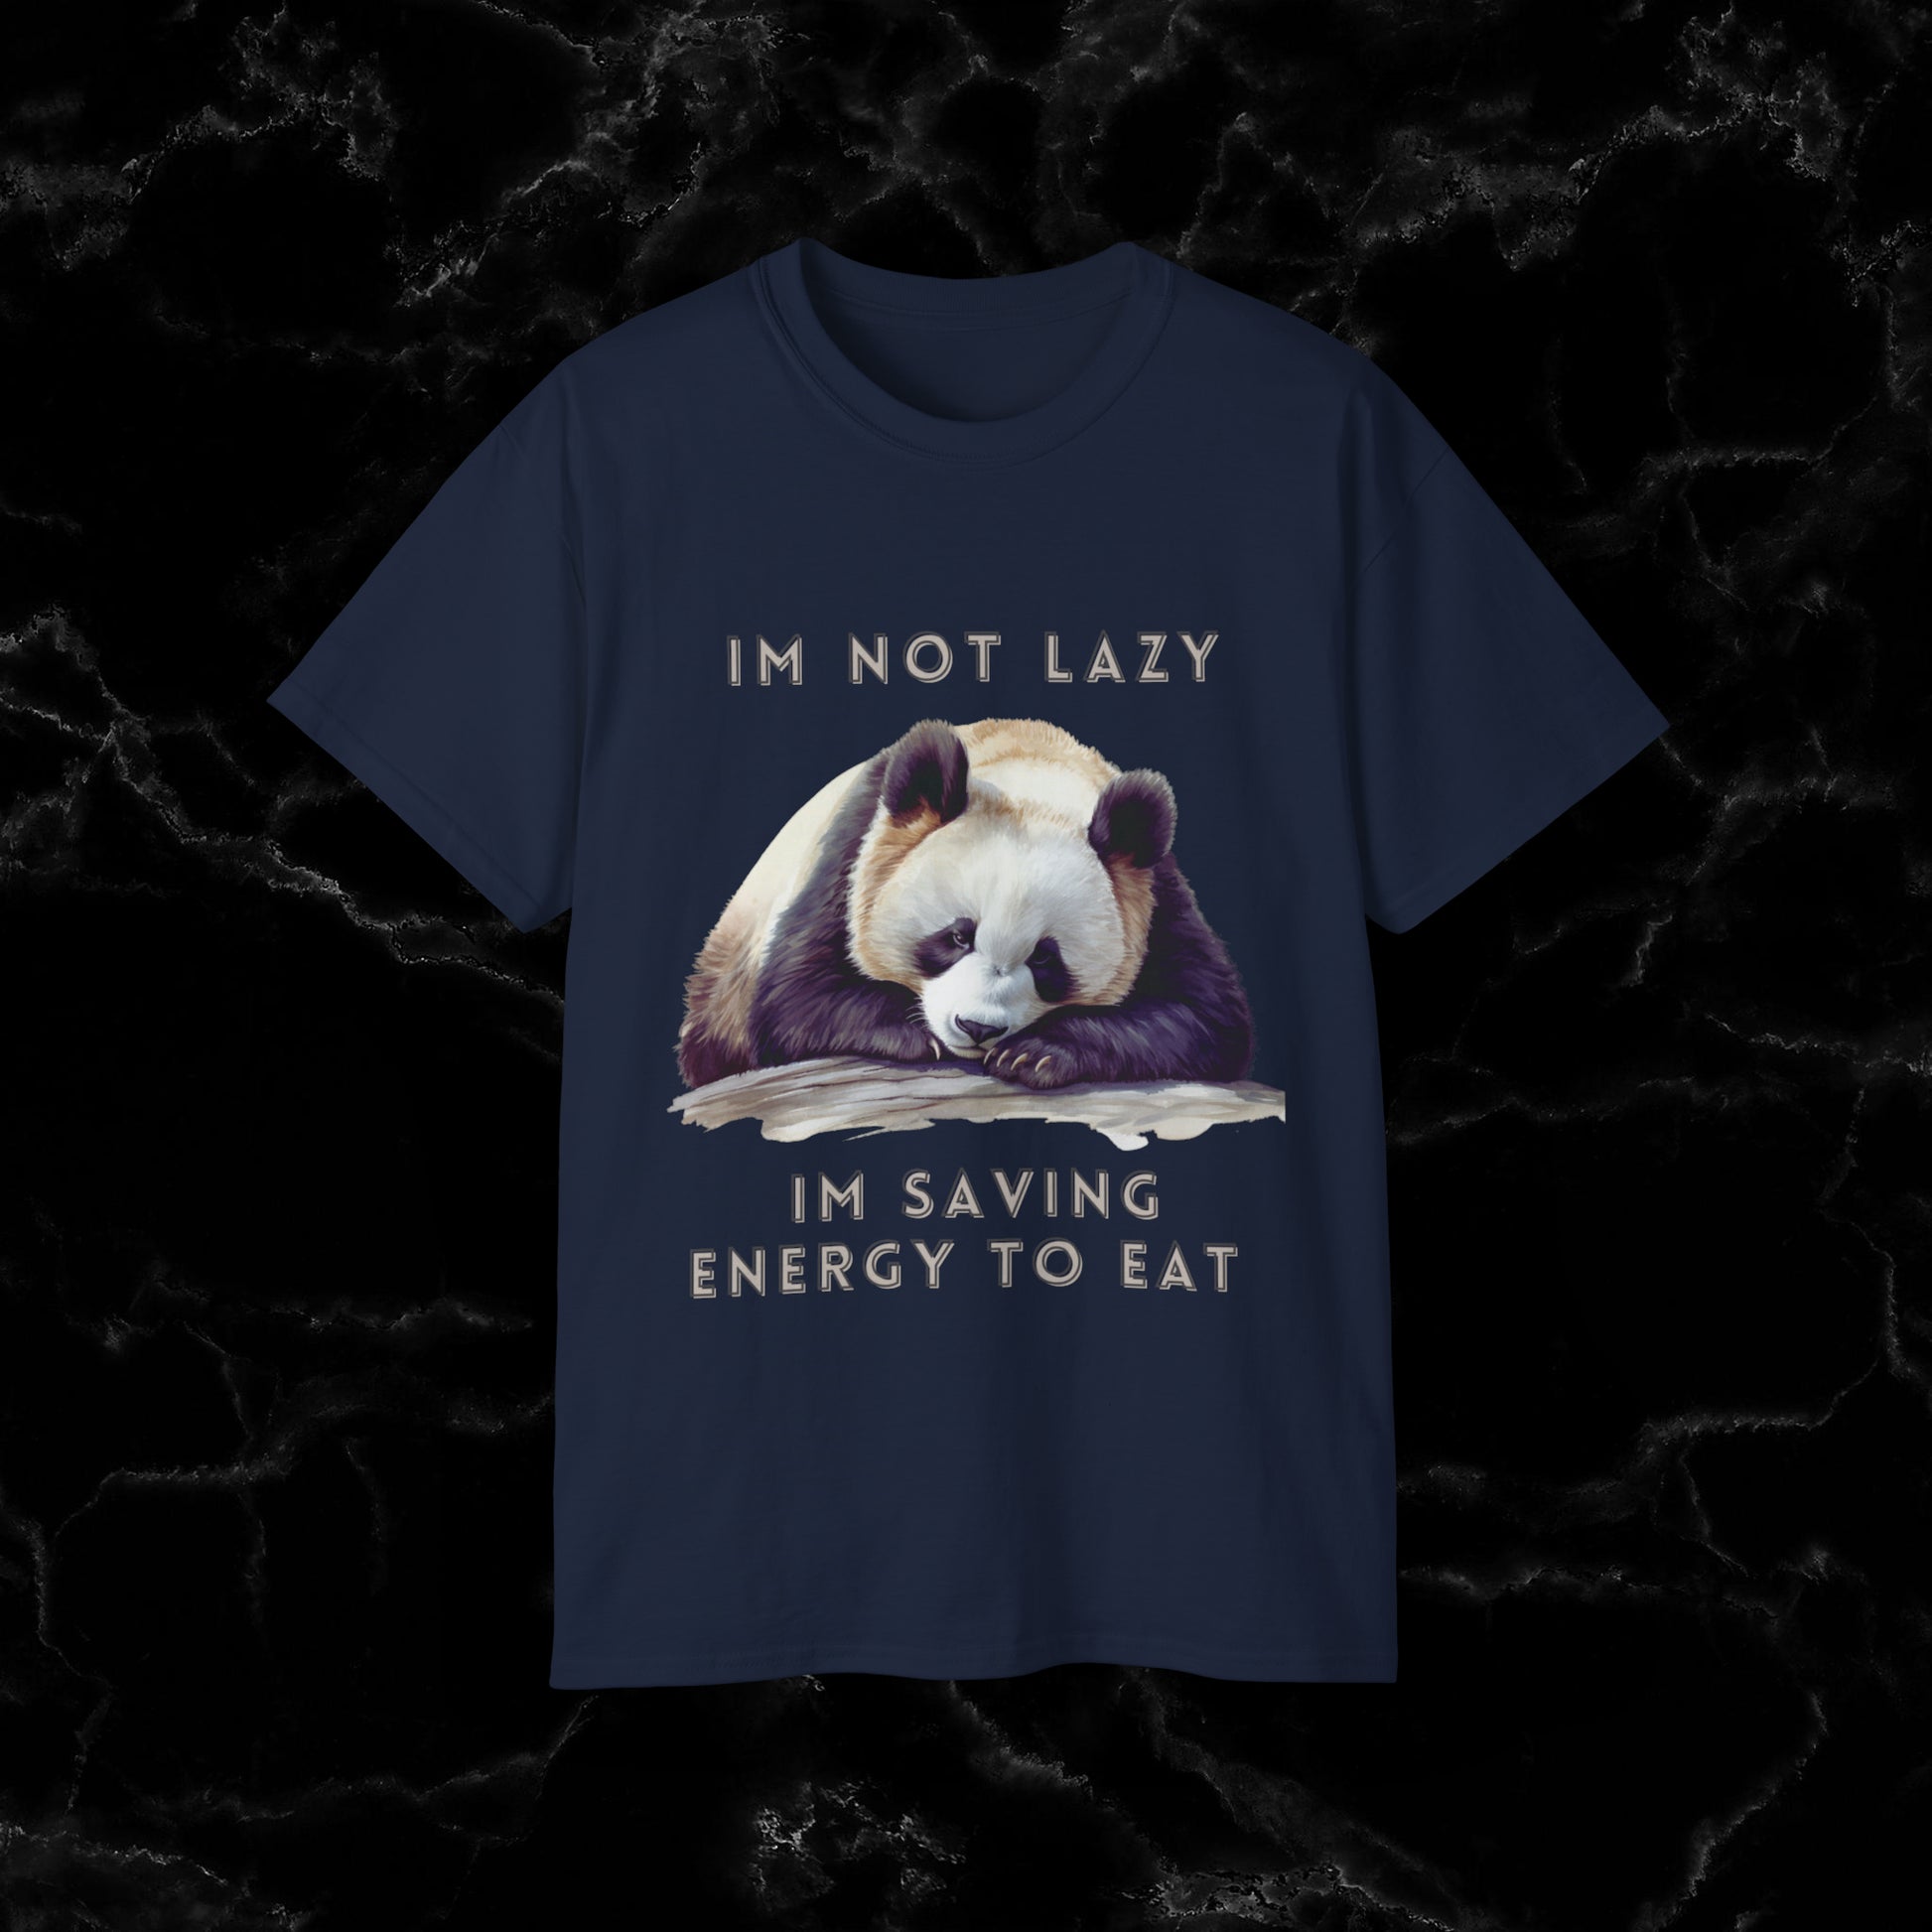 Nap Time Panda Unisex Funny Tee - Hilarious Panda Nap Design - I'm Not Lazy, I'm Saving Energy to Eat T-Shirt Navy S 